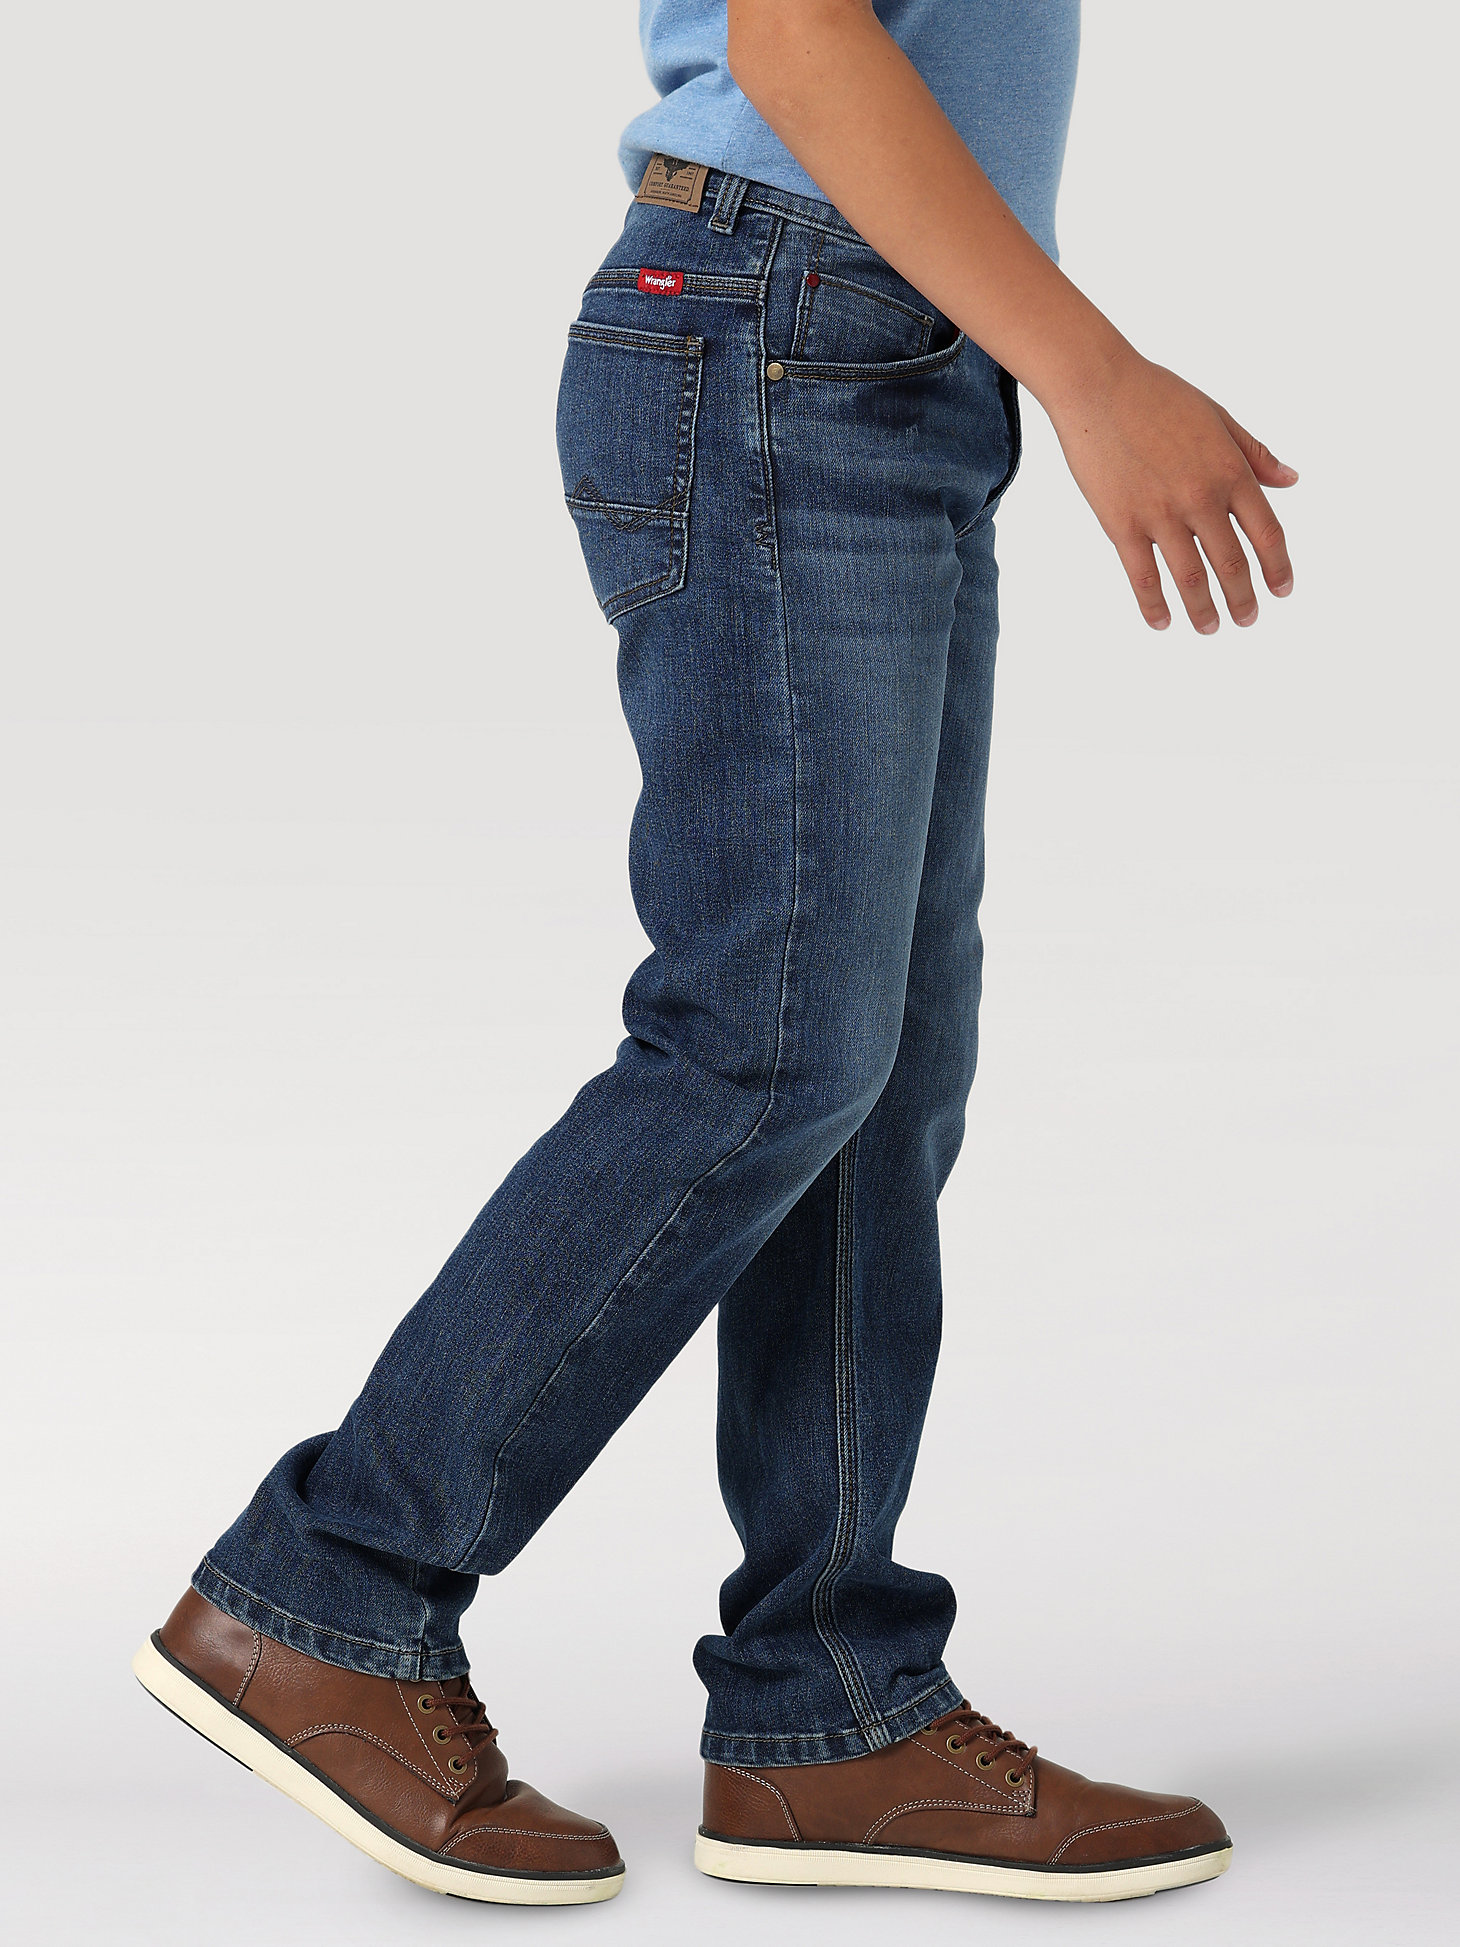 Boy's Indigood Slim Fit Jean (8-16) in Blue Moon alternative view 3